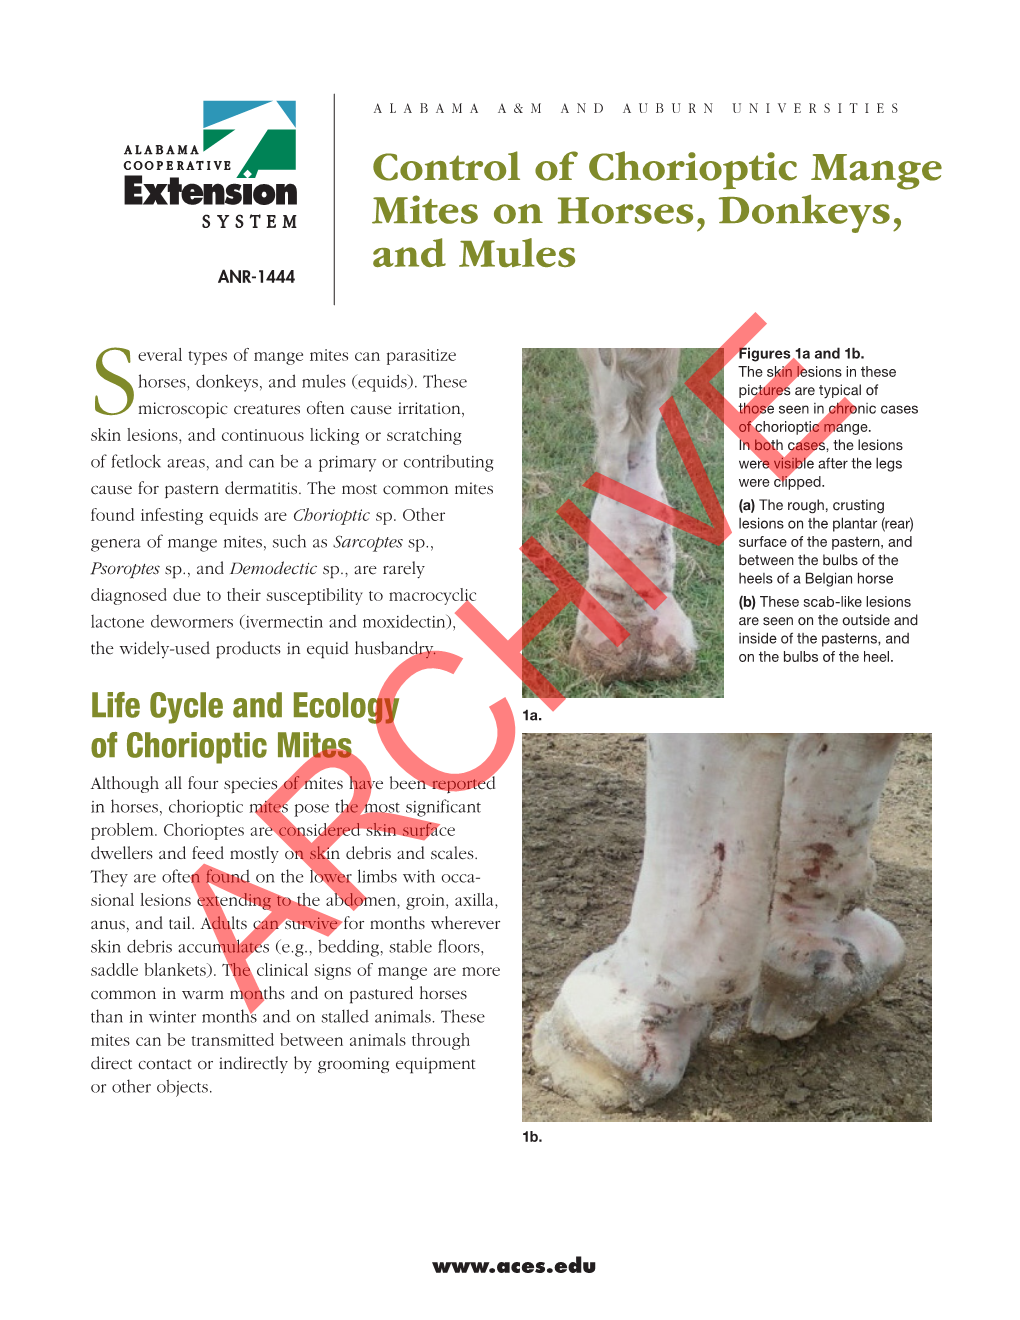 Control of Chorioptic Mange Mites on Horses, Donkeys, and Mules ANR-1444